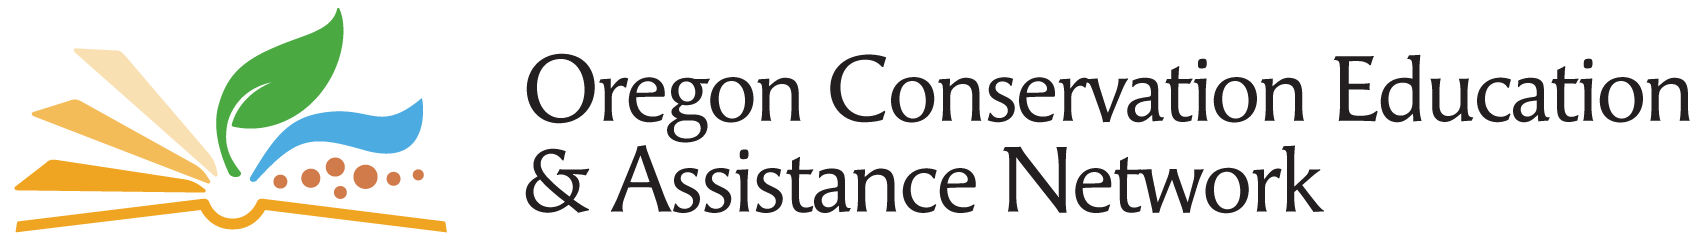 Oregon Conservation Education & Assistance Network